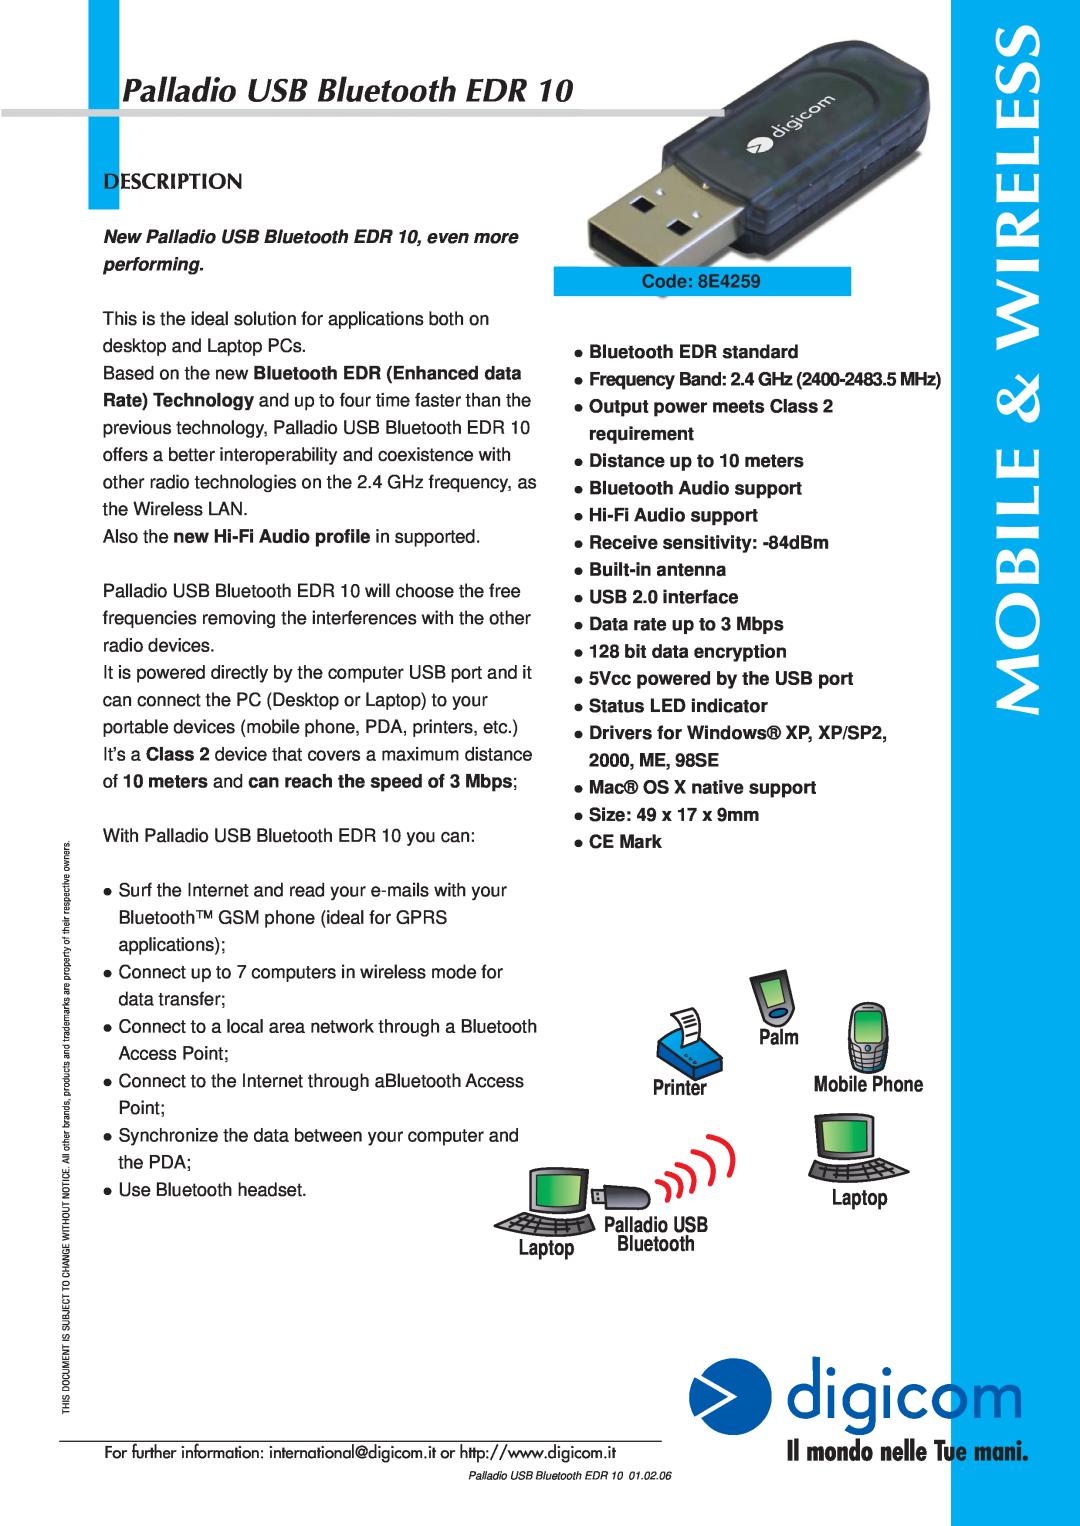 Digicom EDR 10 manual Mobile, Wireless, Palladio USB Bluetooth EDR, Description, Laptop, Palm, Printer, performing 